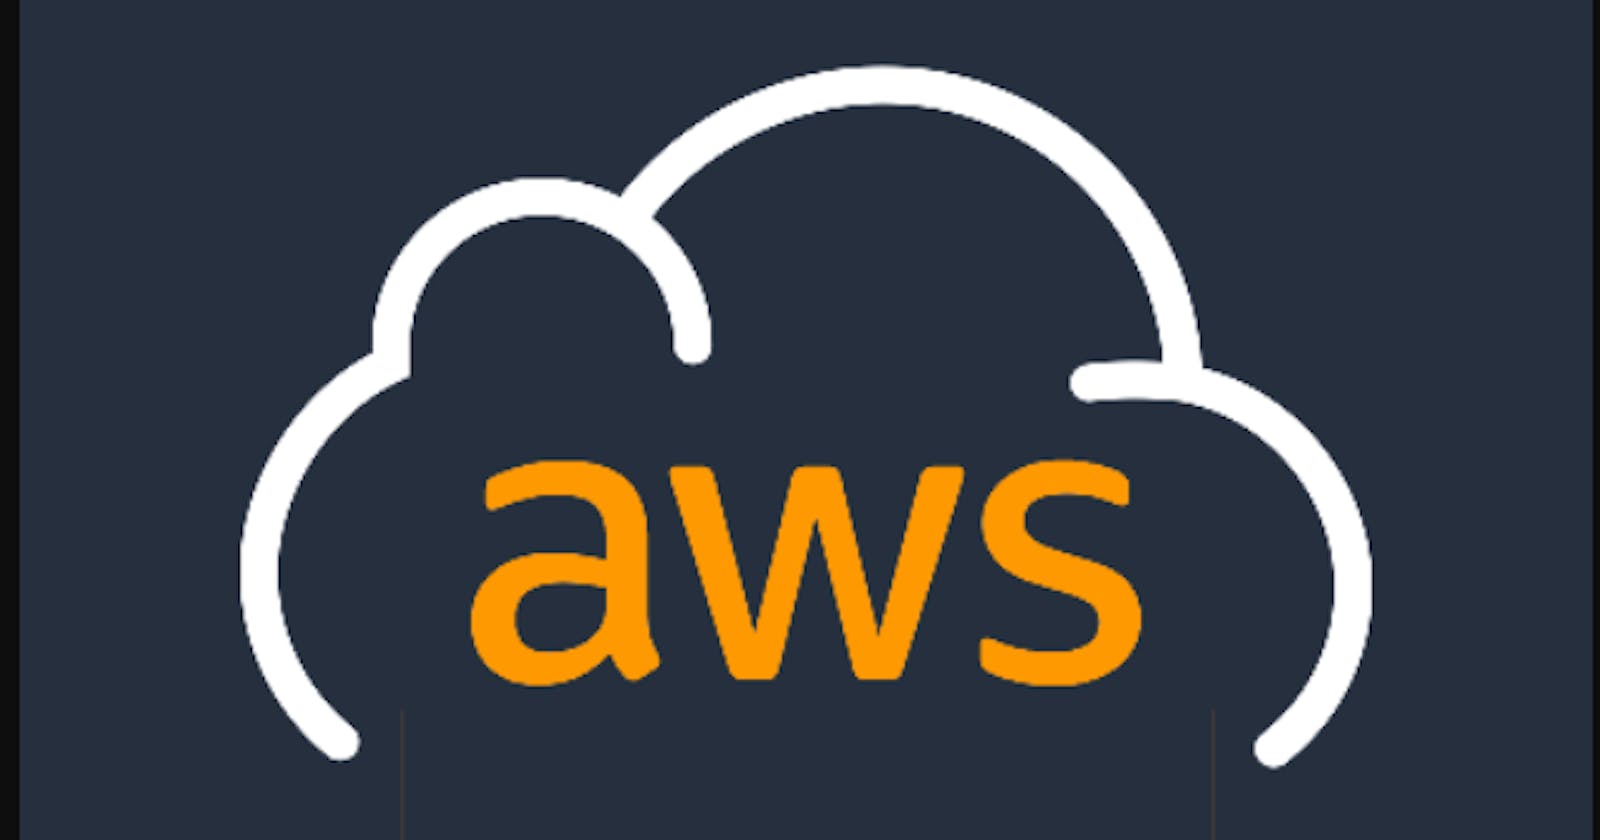 Amazon Web Services ( AWS )